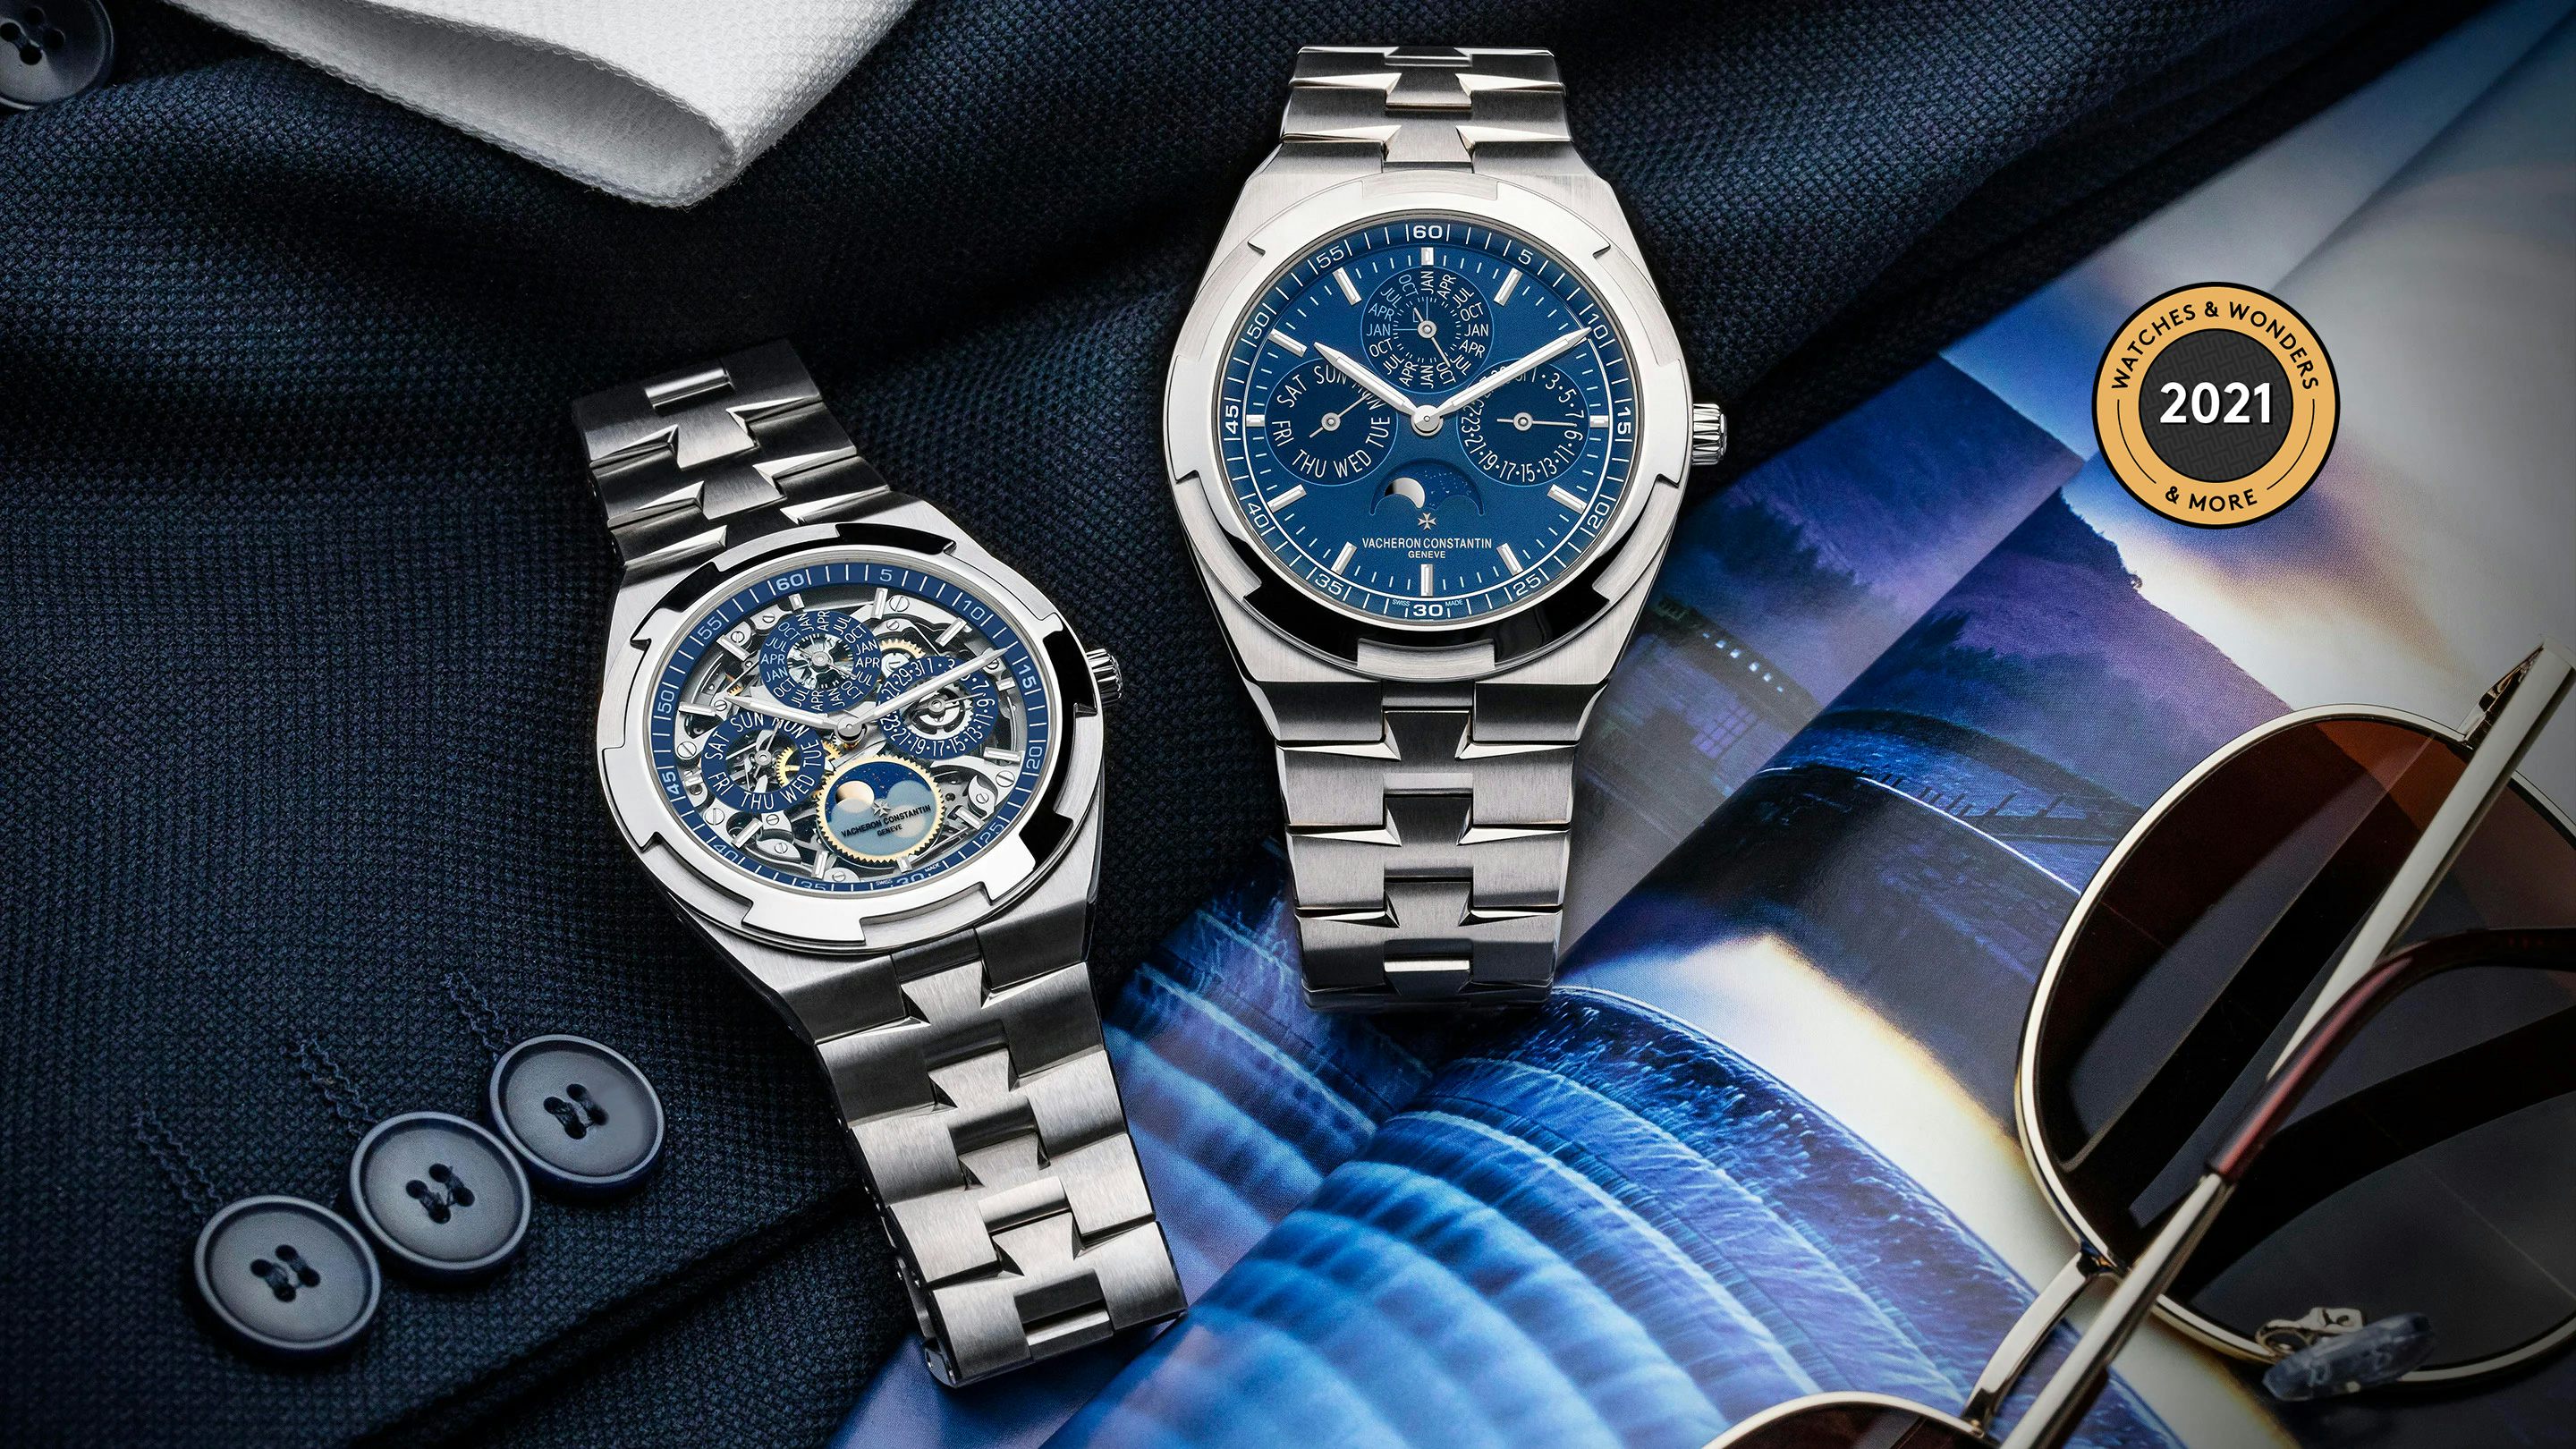 Vacheron Constantin Overseas Chronograph Blue Dial Watch Hands-On